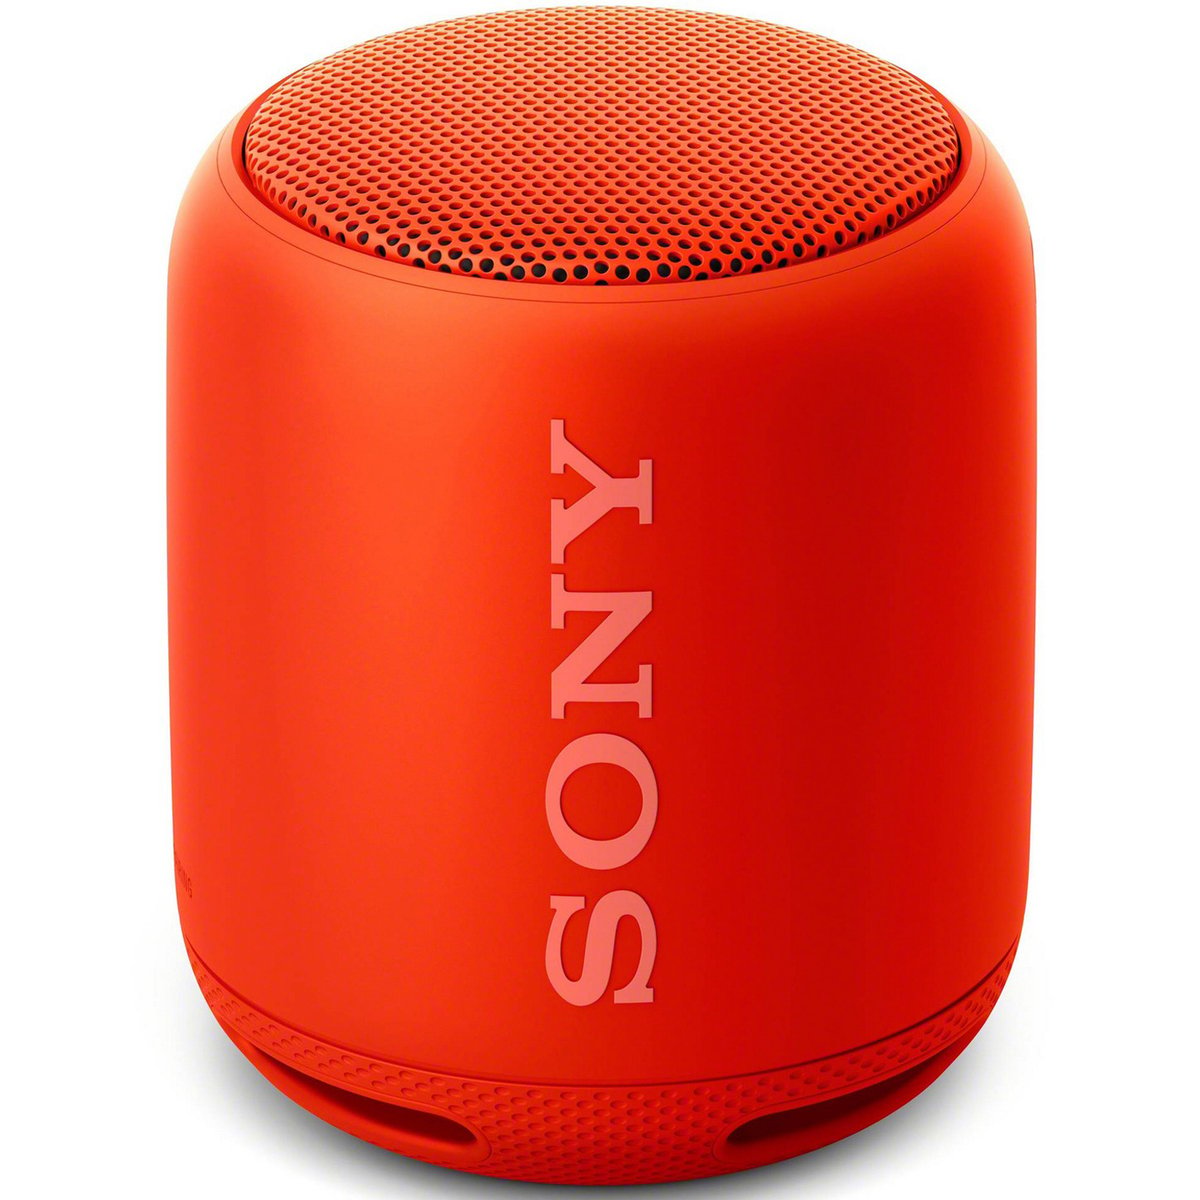 Sony Portable Bluetooth Speaker SRS-XB10 Red